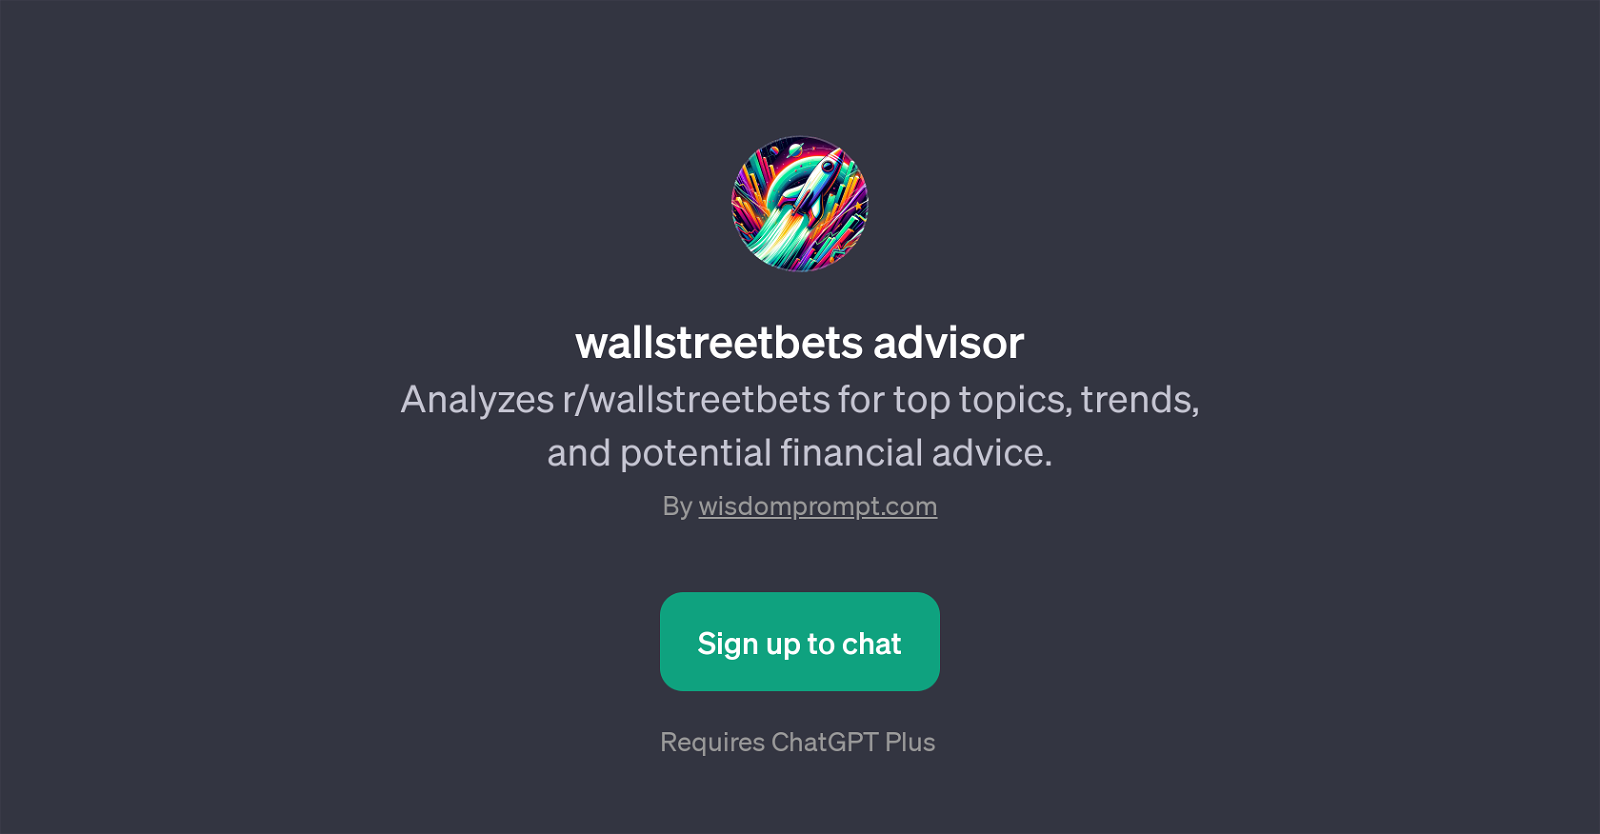 wallstreetbets advisor website